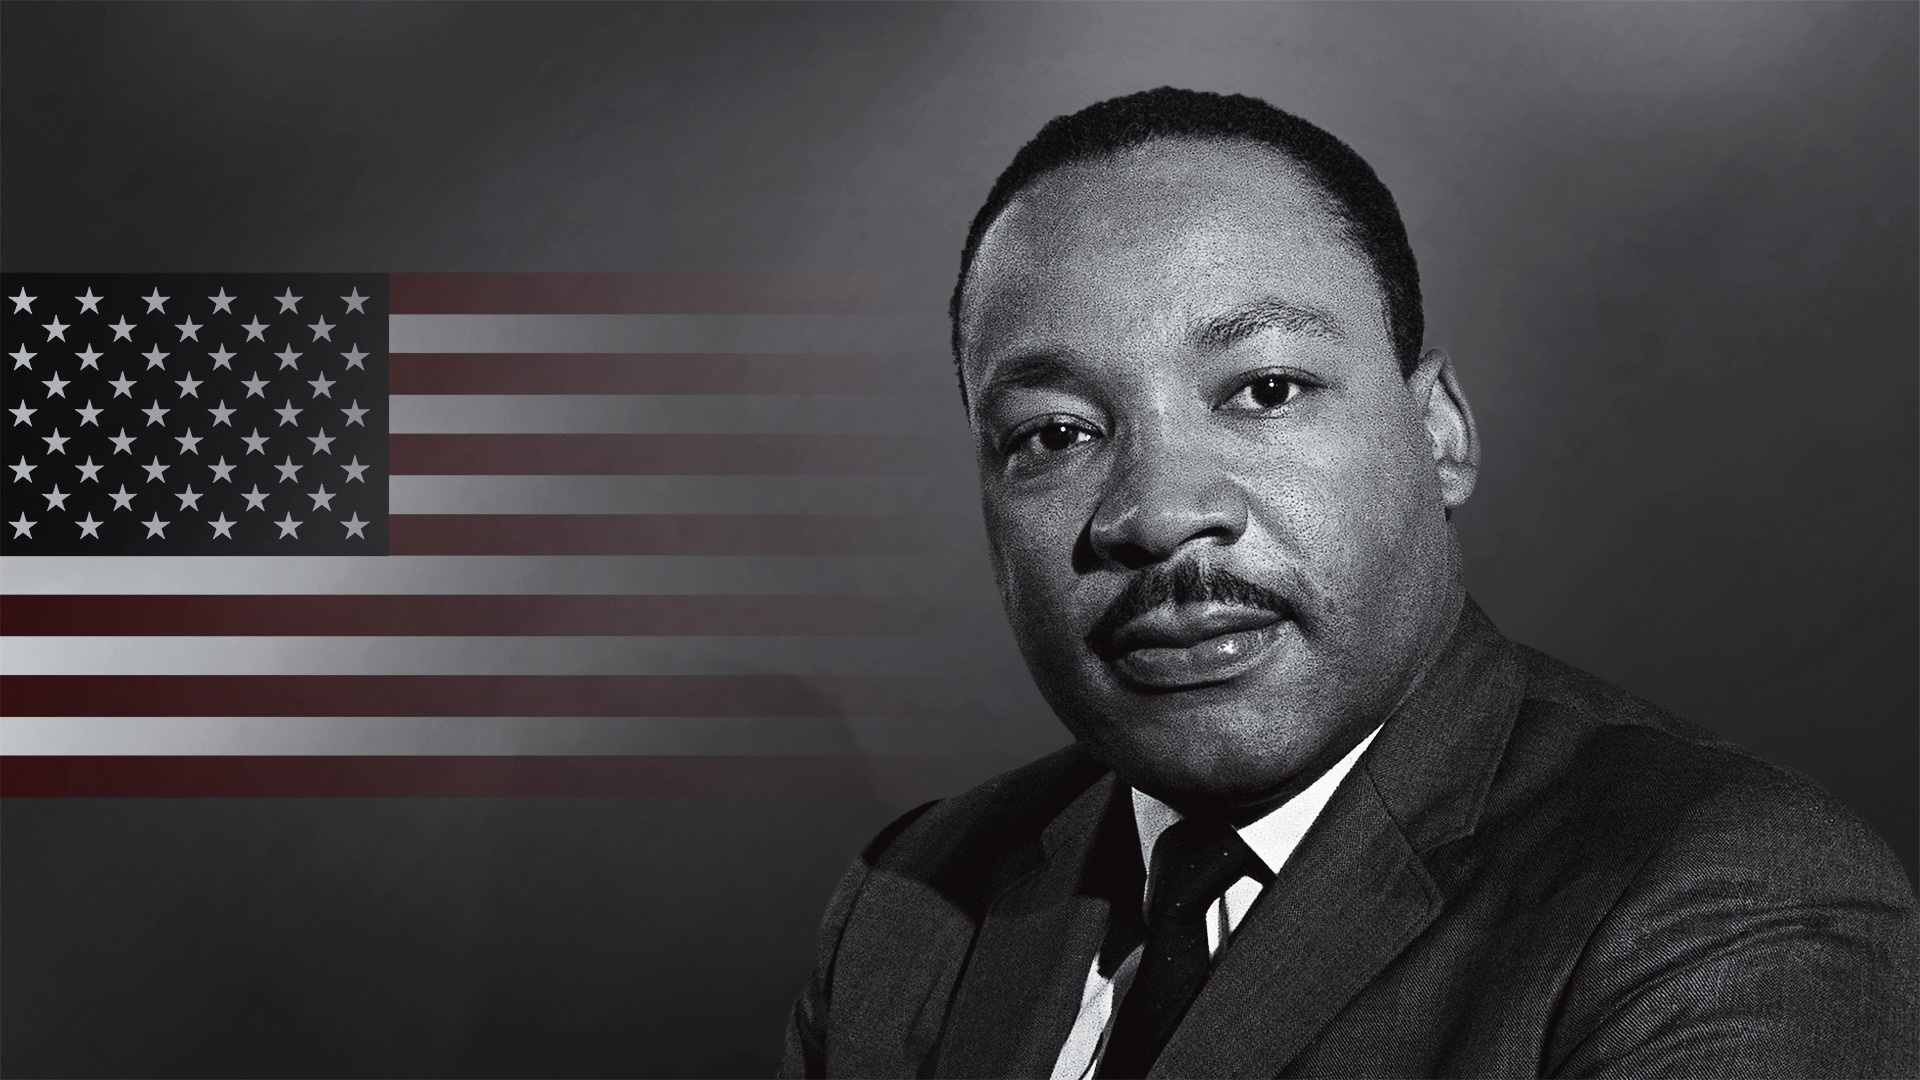 Martin Luther King Jr., Free download, MLK wallpapers, Desktop and mobile backgrounds, 1920x1080 Full HD Desktop